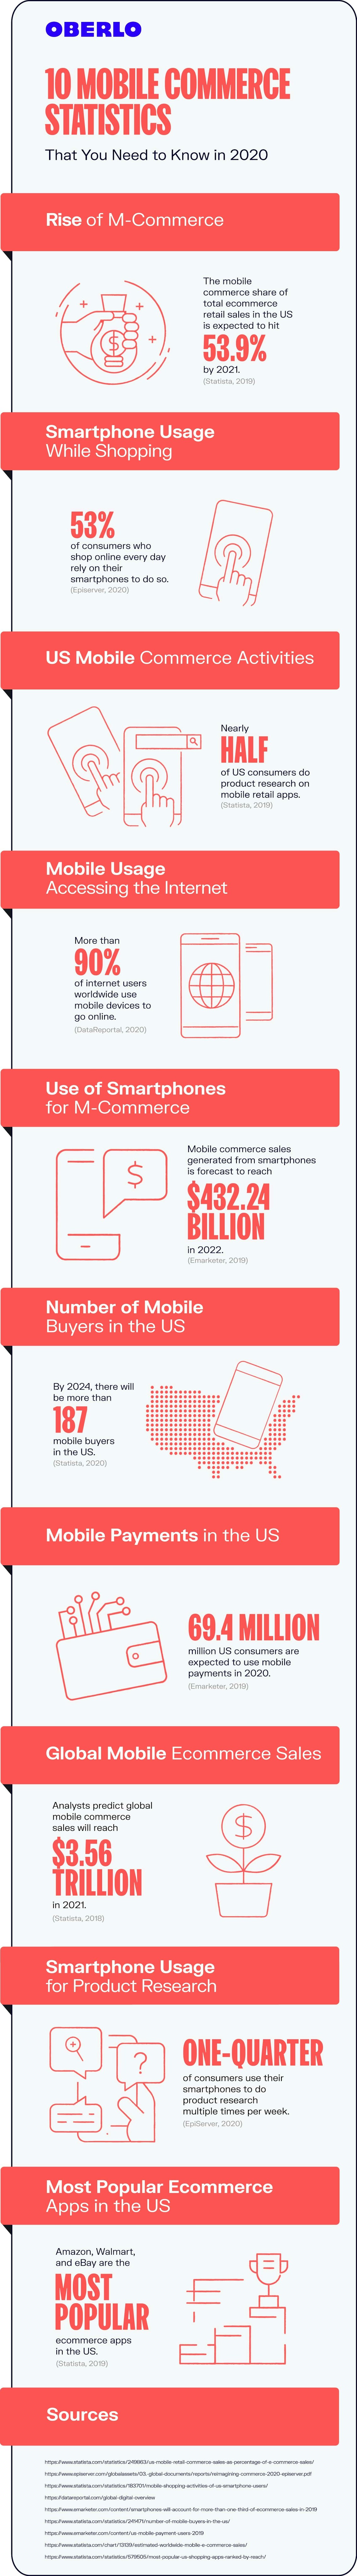 mobile commerce statistics 2020